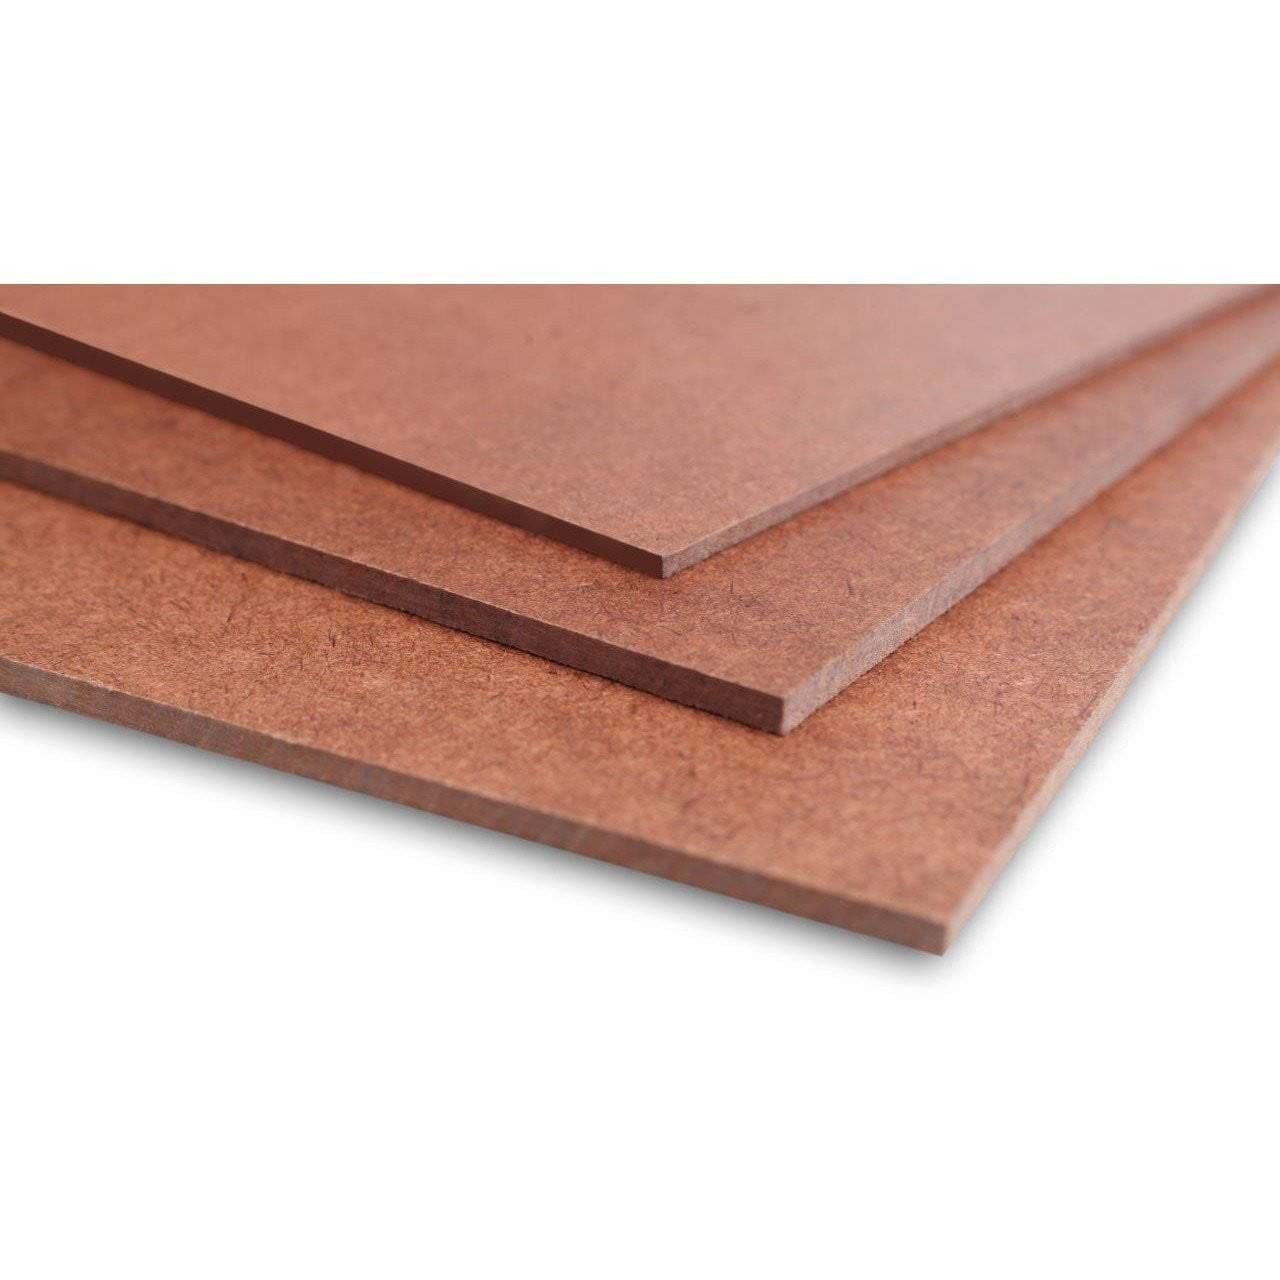 Board Masonite Hardboard-Lumber & Sheet Stock-Evowood-ƒ1.2x2.4𝑚 x 𝑇6𝑚𝑚-Brown-diyshop.co.za